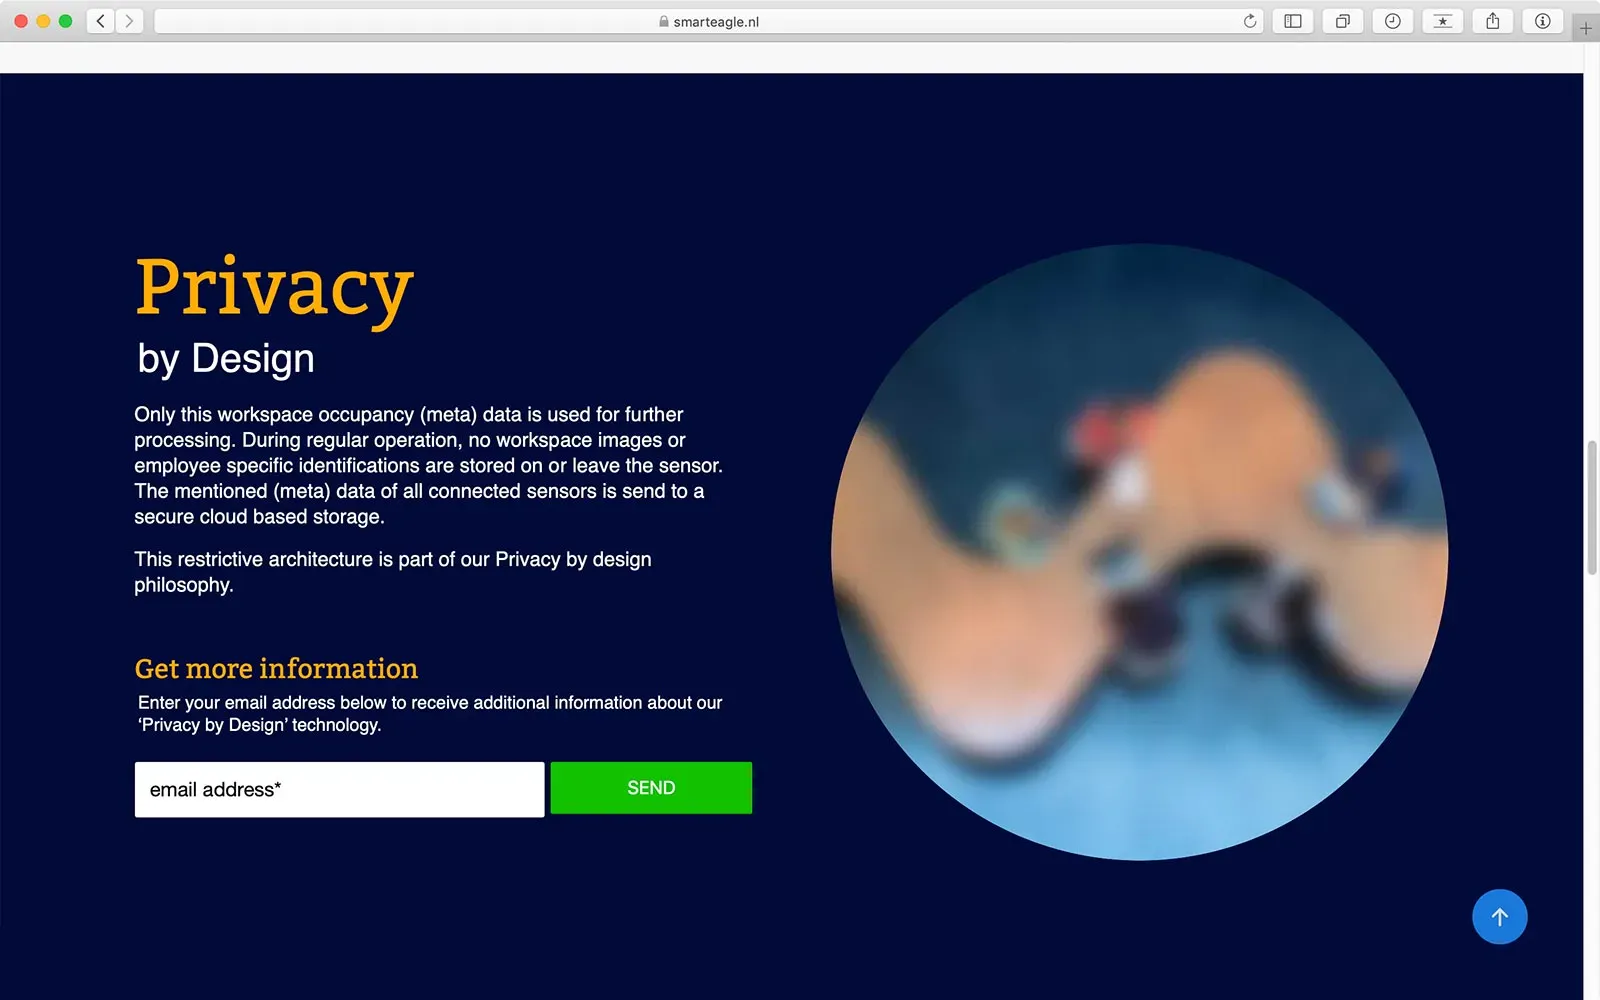 Privacy by Design - website SmartEagle